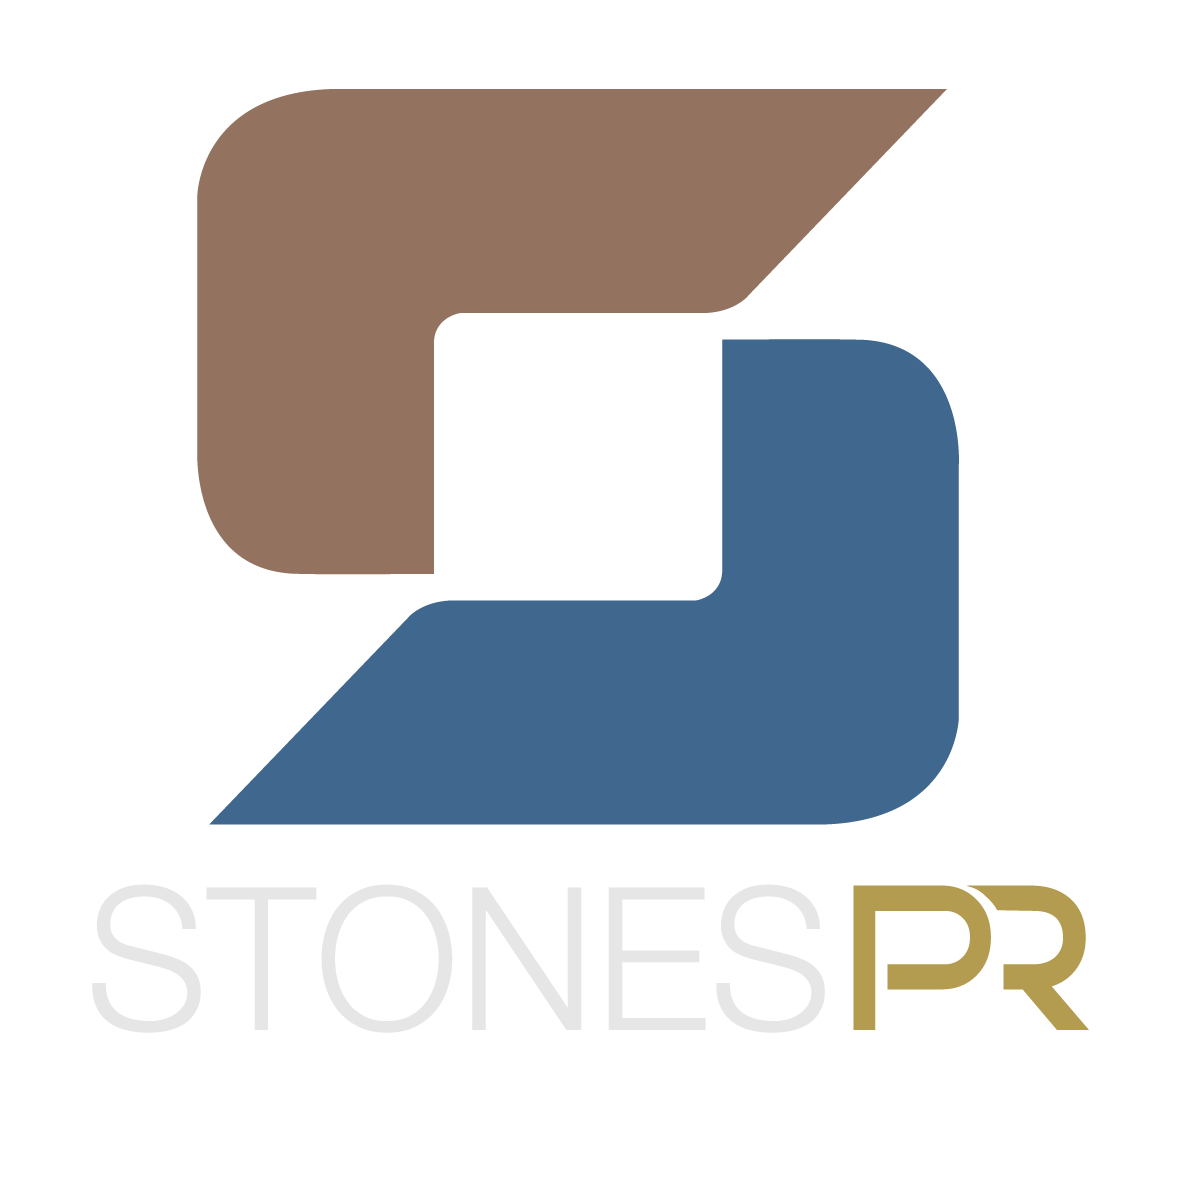 Stones PR Logo